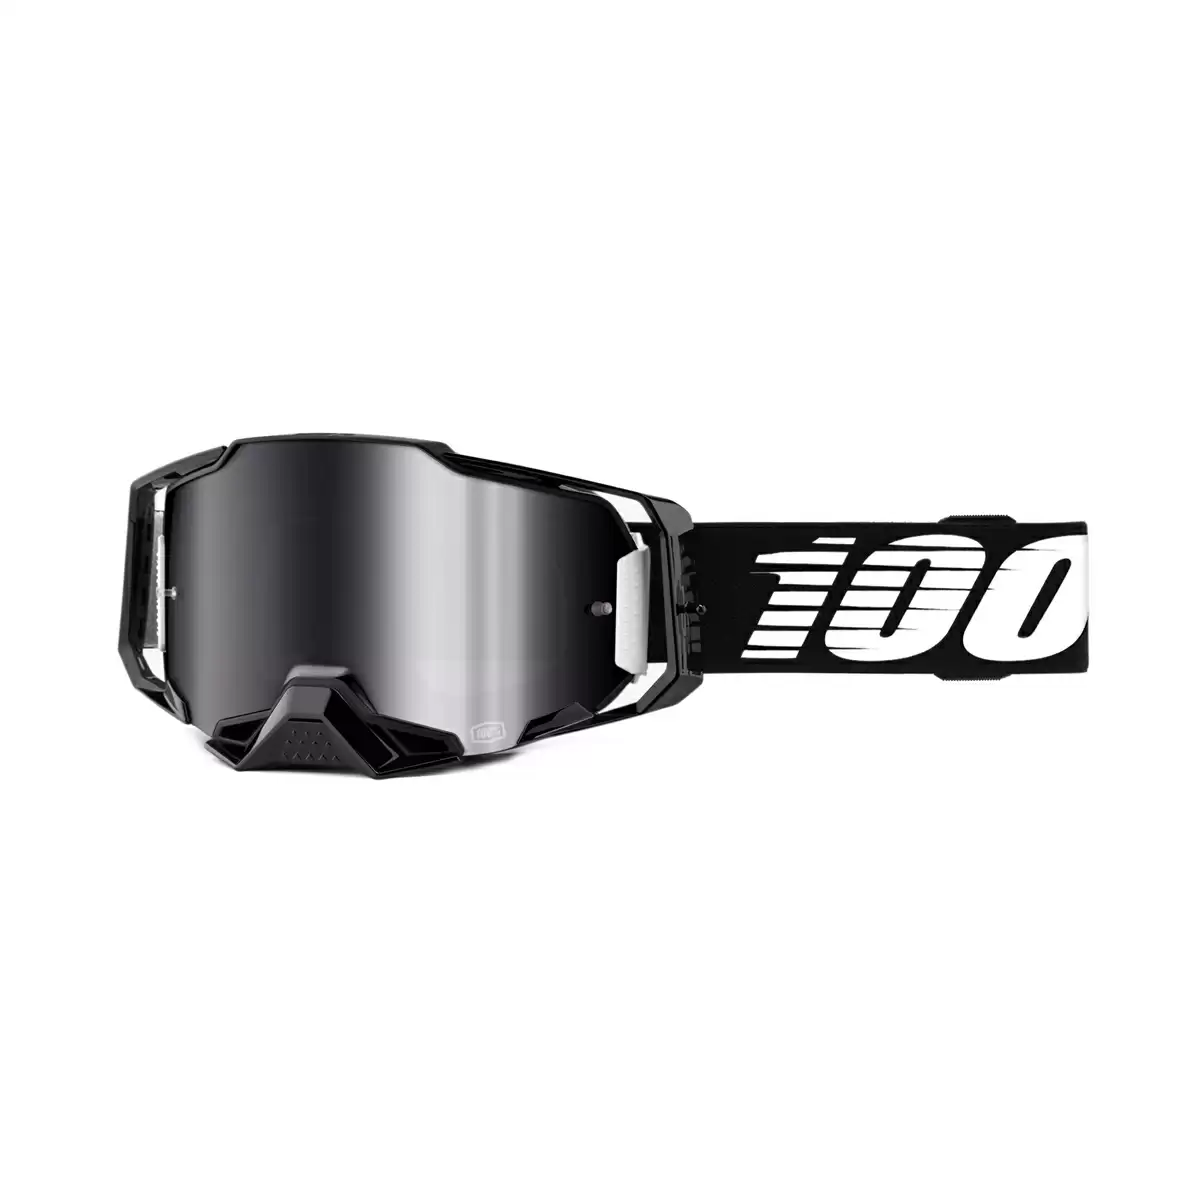 Armega Goggle Black Silver Flash Mirror Lens - image